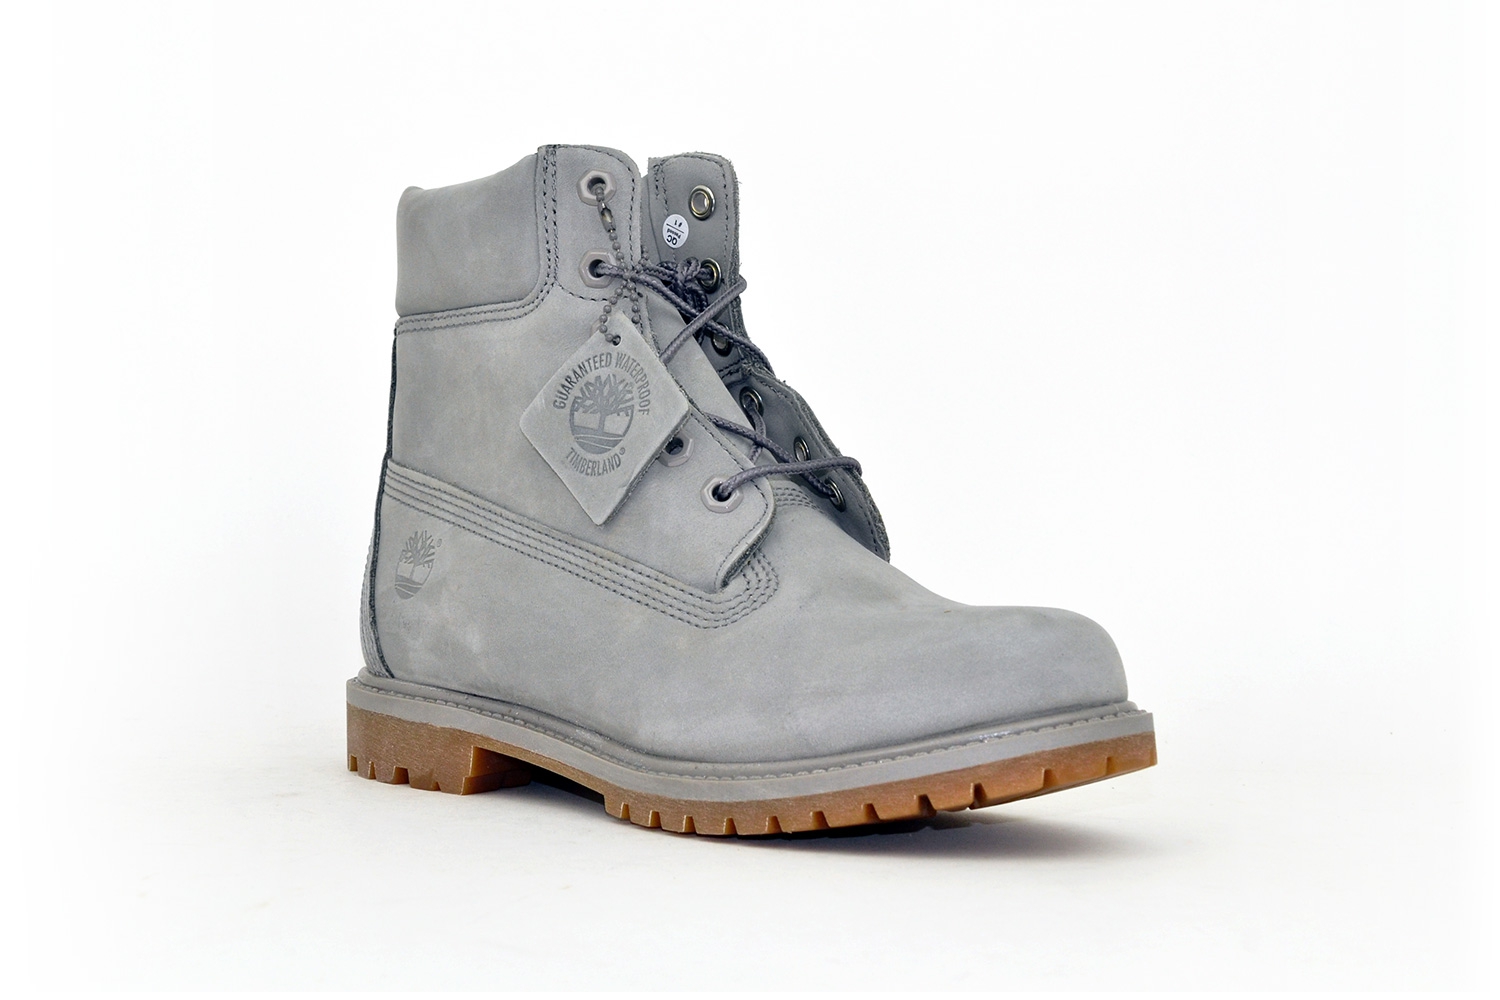 Dar una vuelta pasajero patio de recreo Timberland Damen Classic Leather Boots Grey/ Grau 40